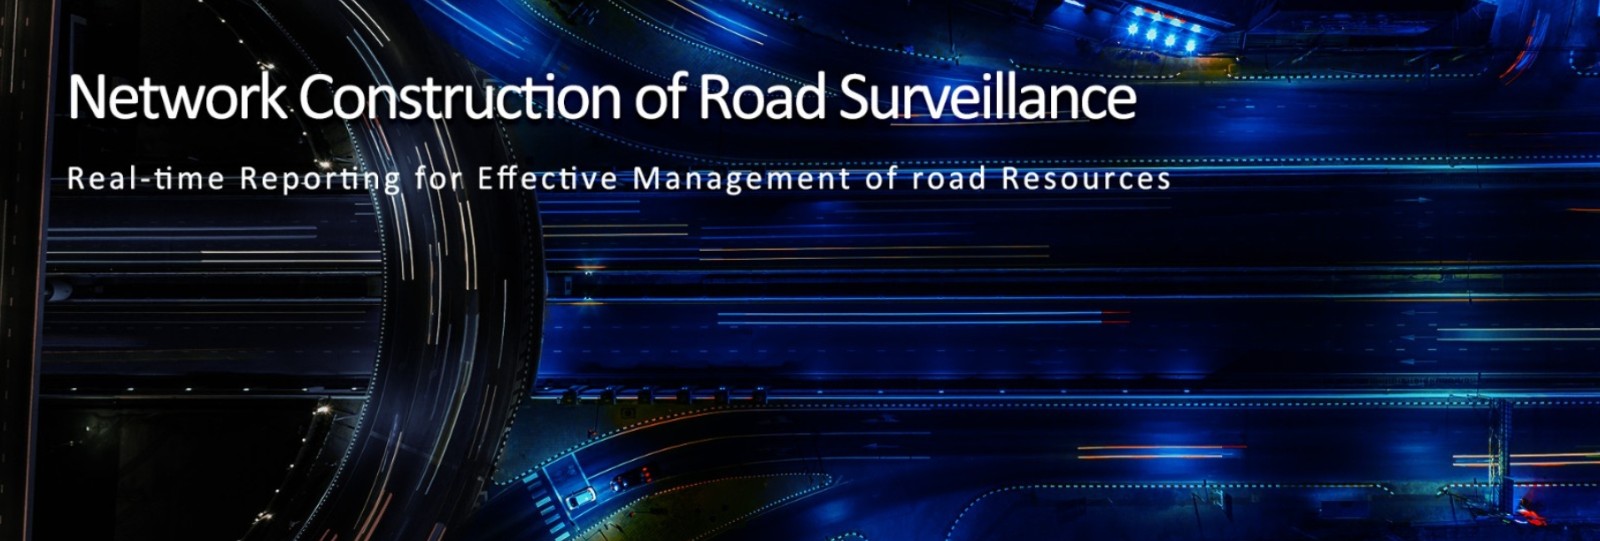 Network_Construction_of_Road_Surveillance